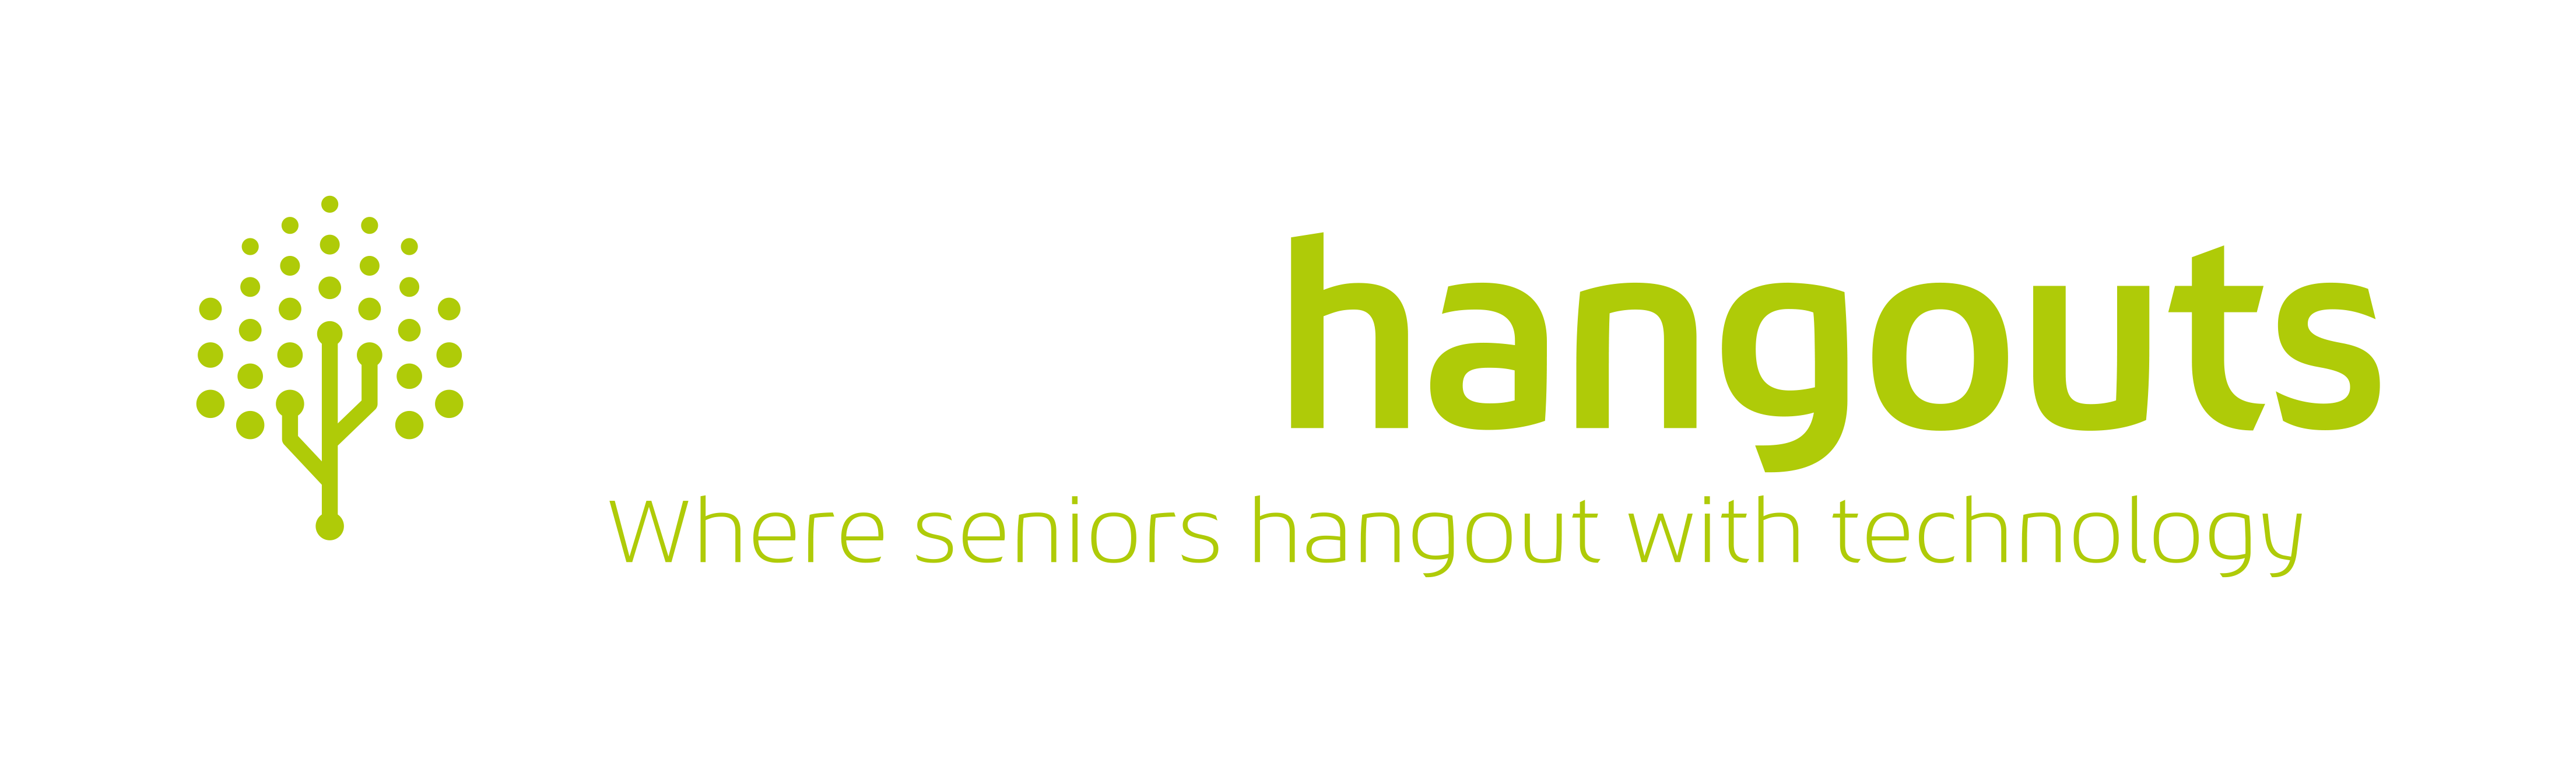 SeniorHangouts-logo-wide-NEG